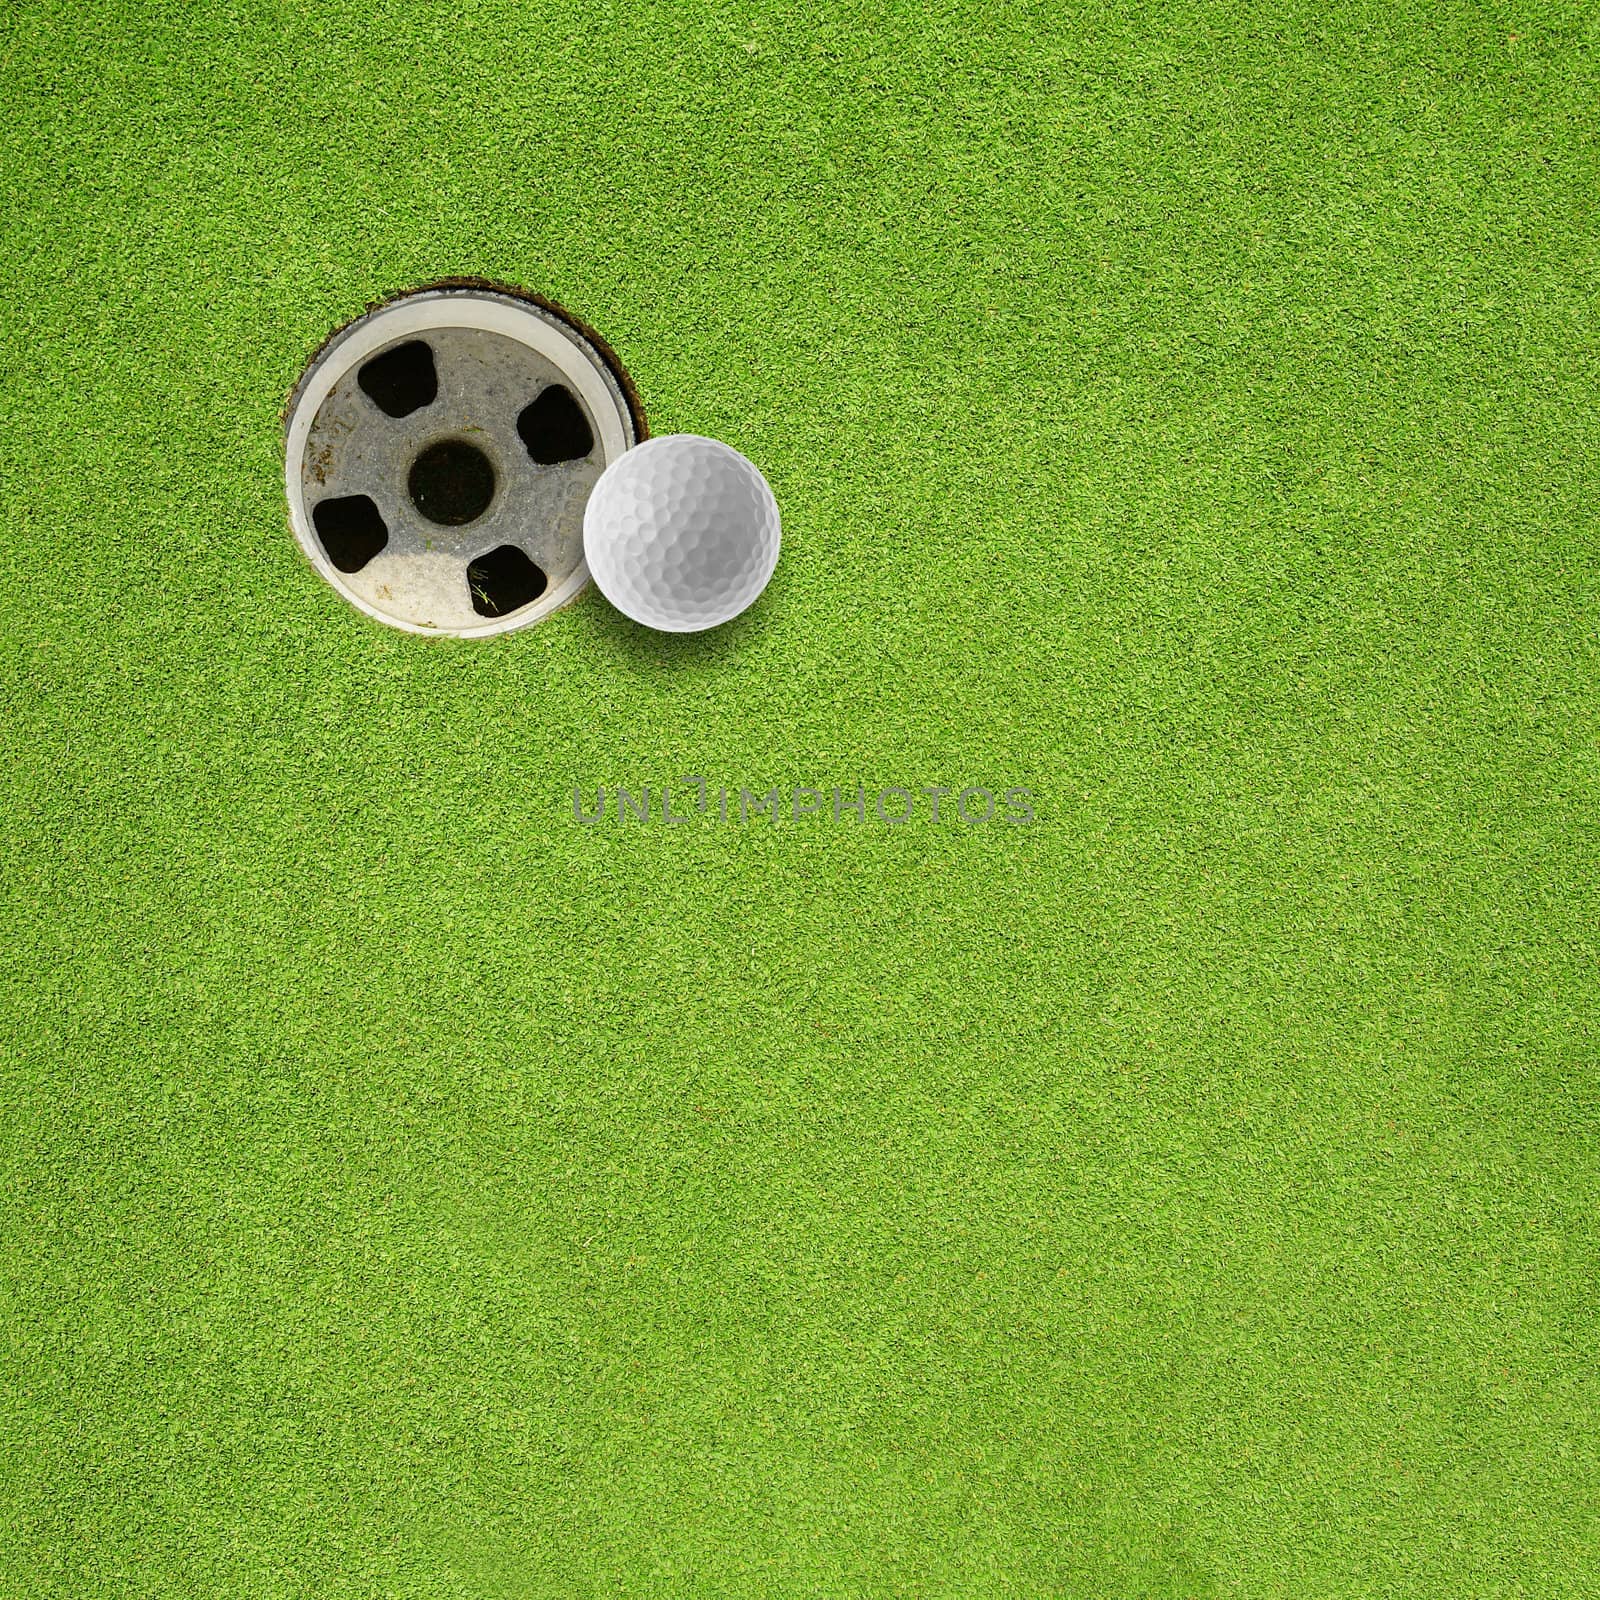 golf ball hole on a field by antpkr